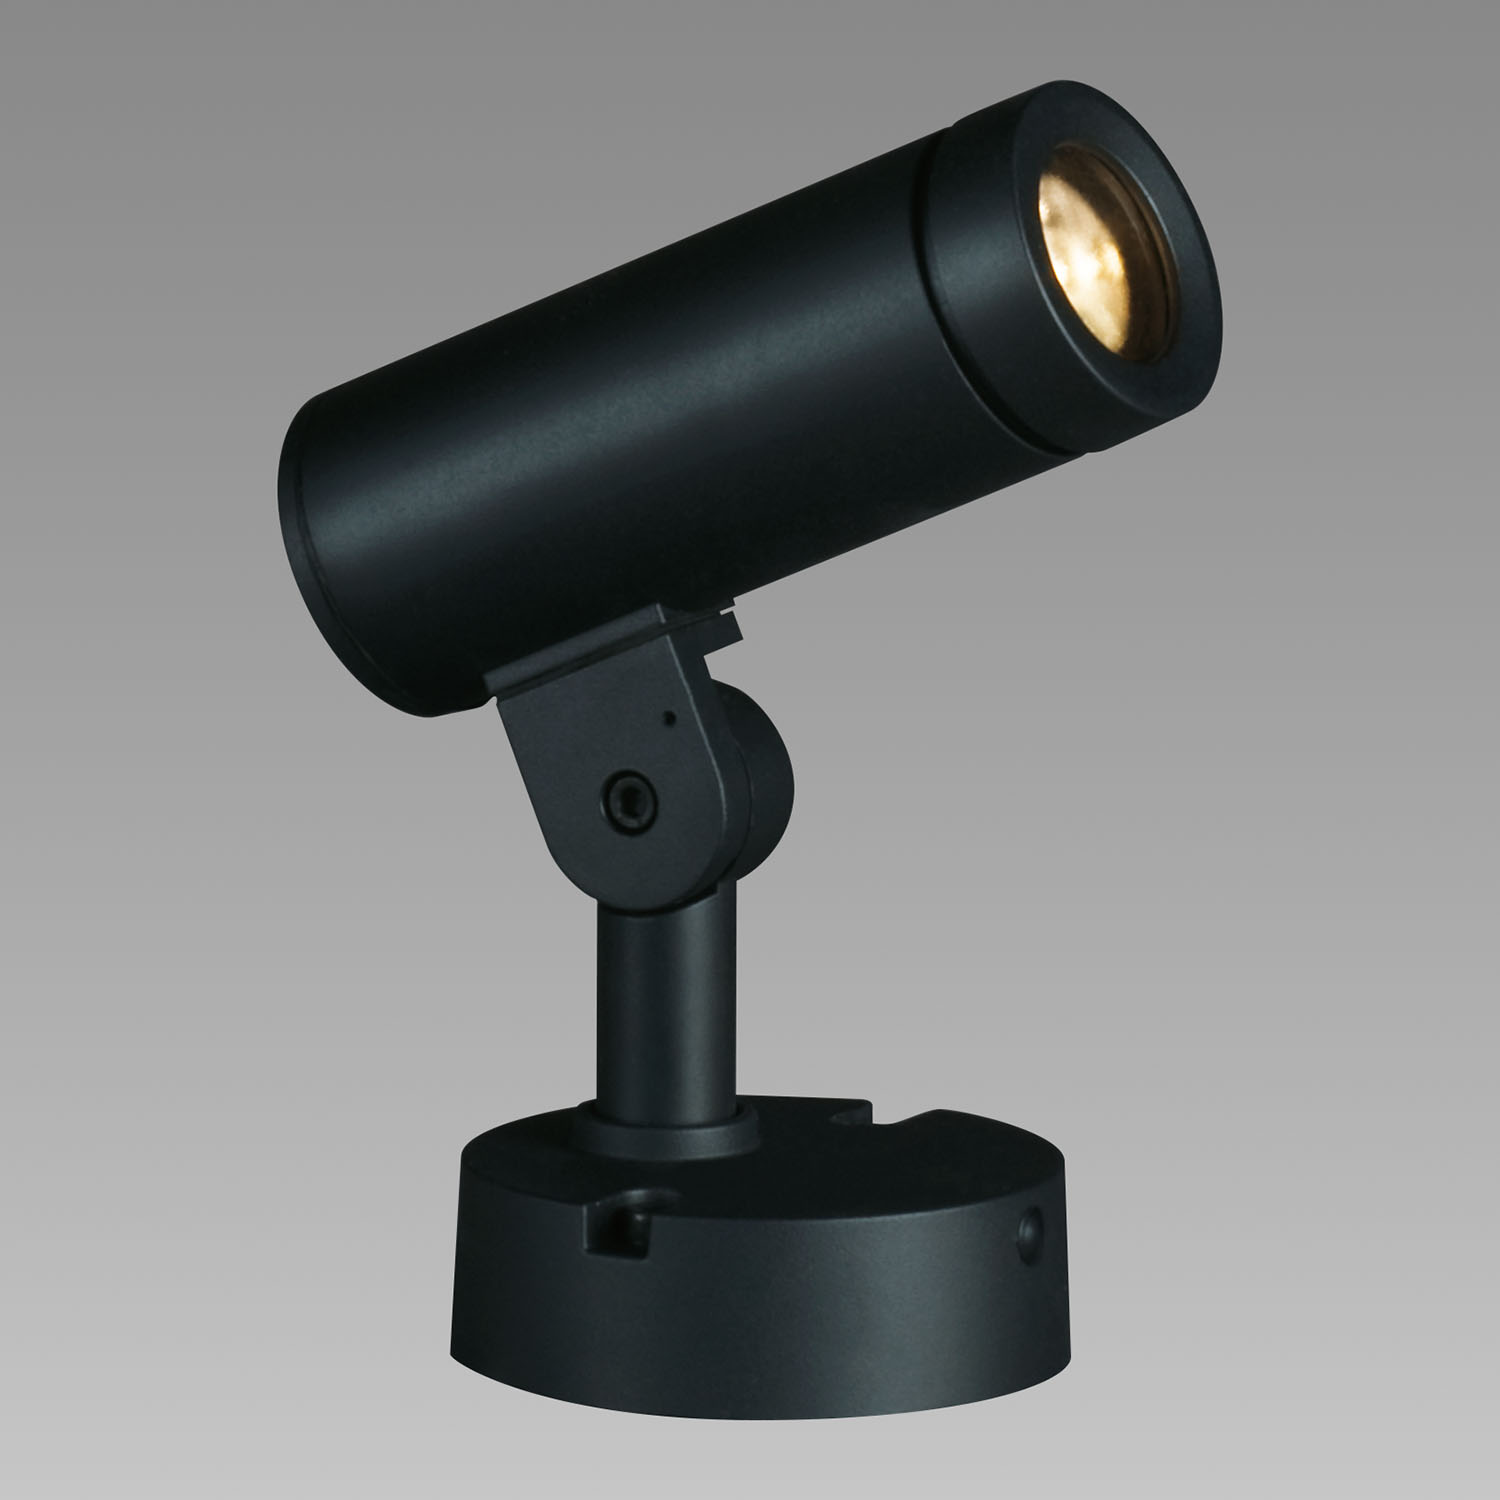 AD-3210-L 山田照明 屋外スポットライト 黒色 LED 電球色 調光 20度 - 3